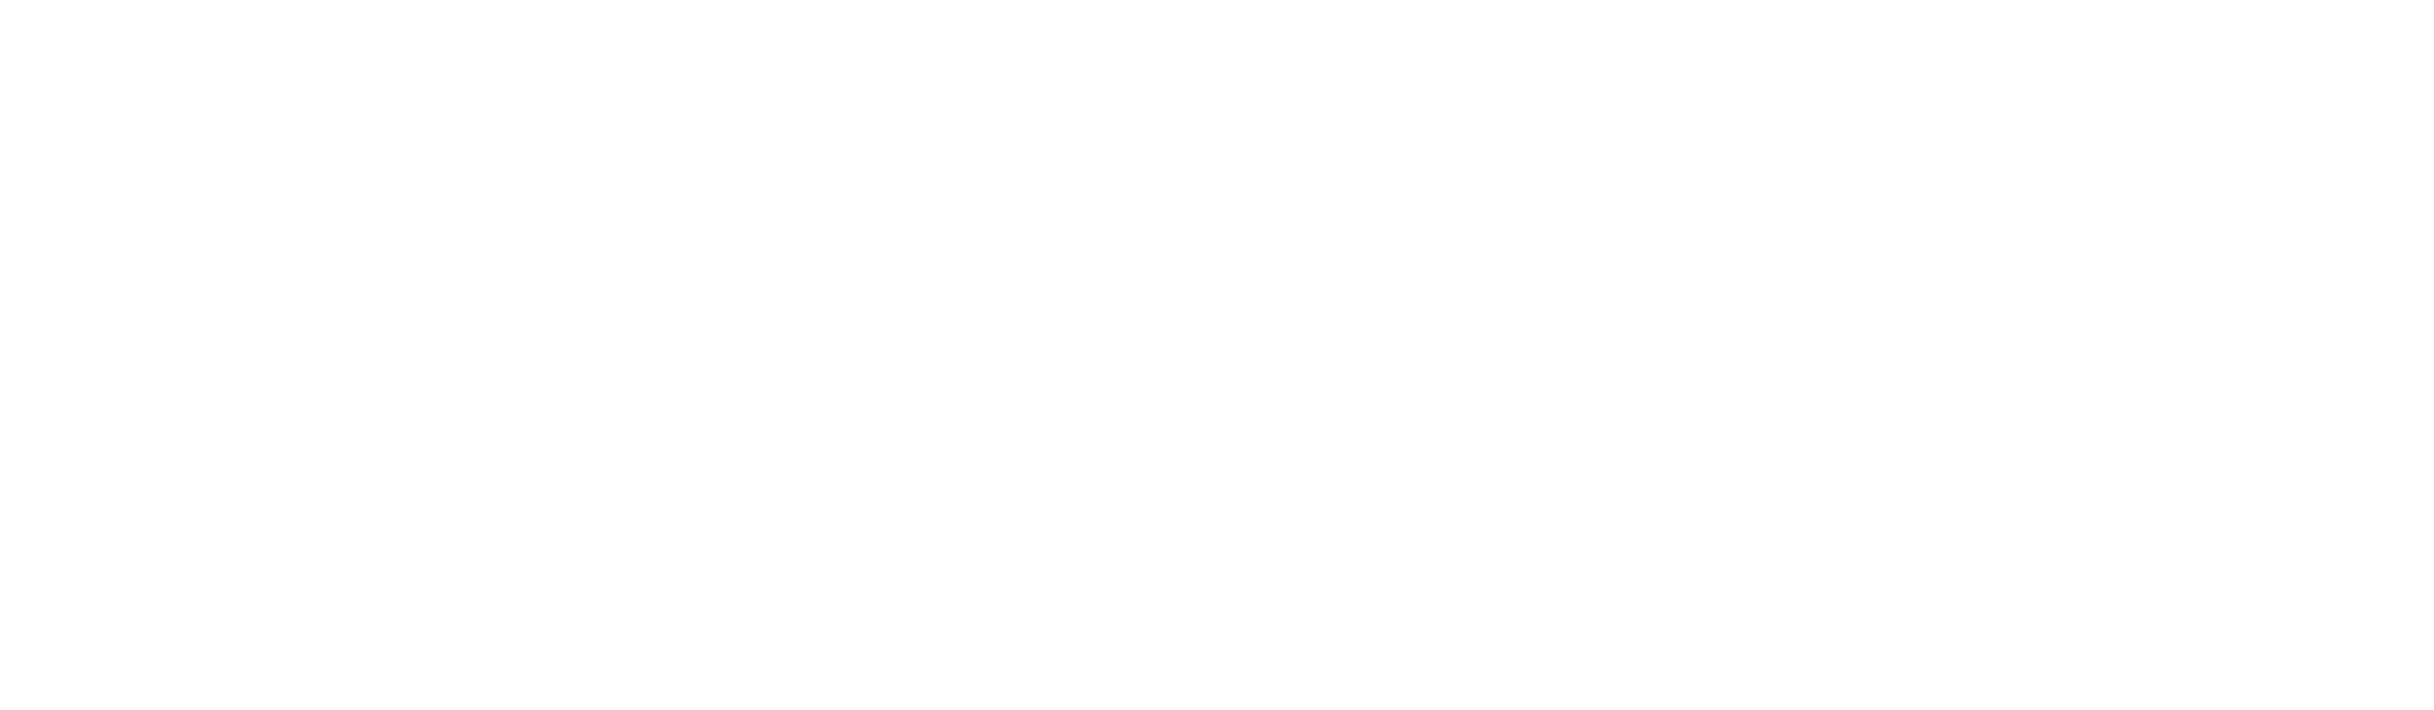 Manchester Hospital School